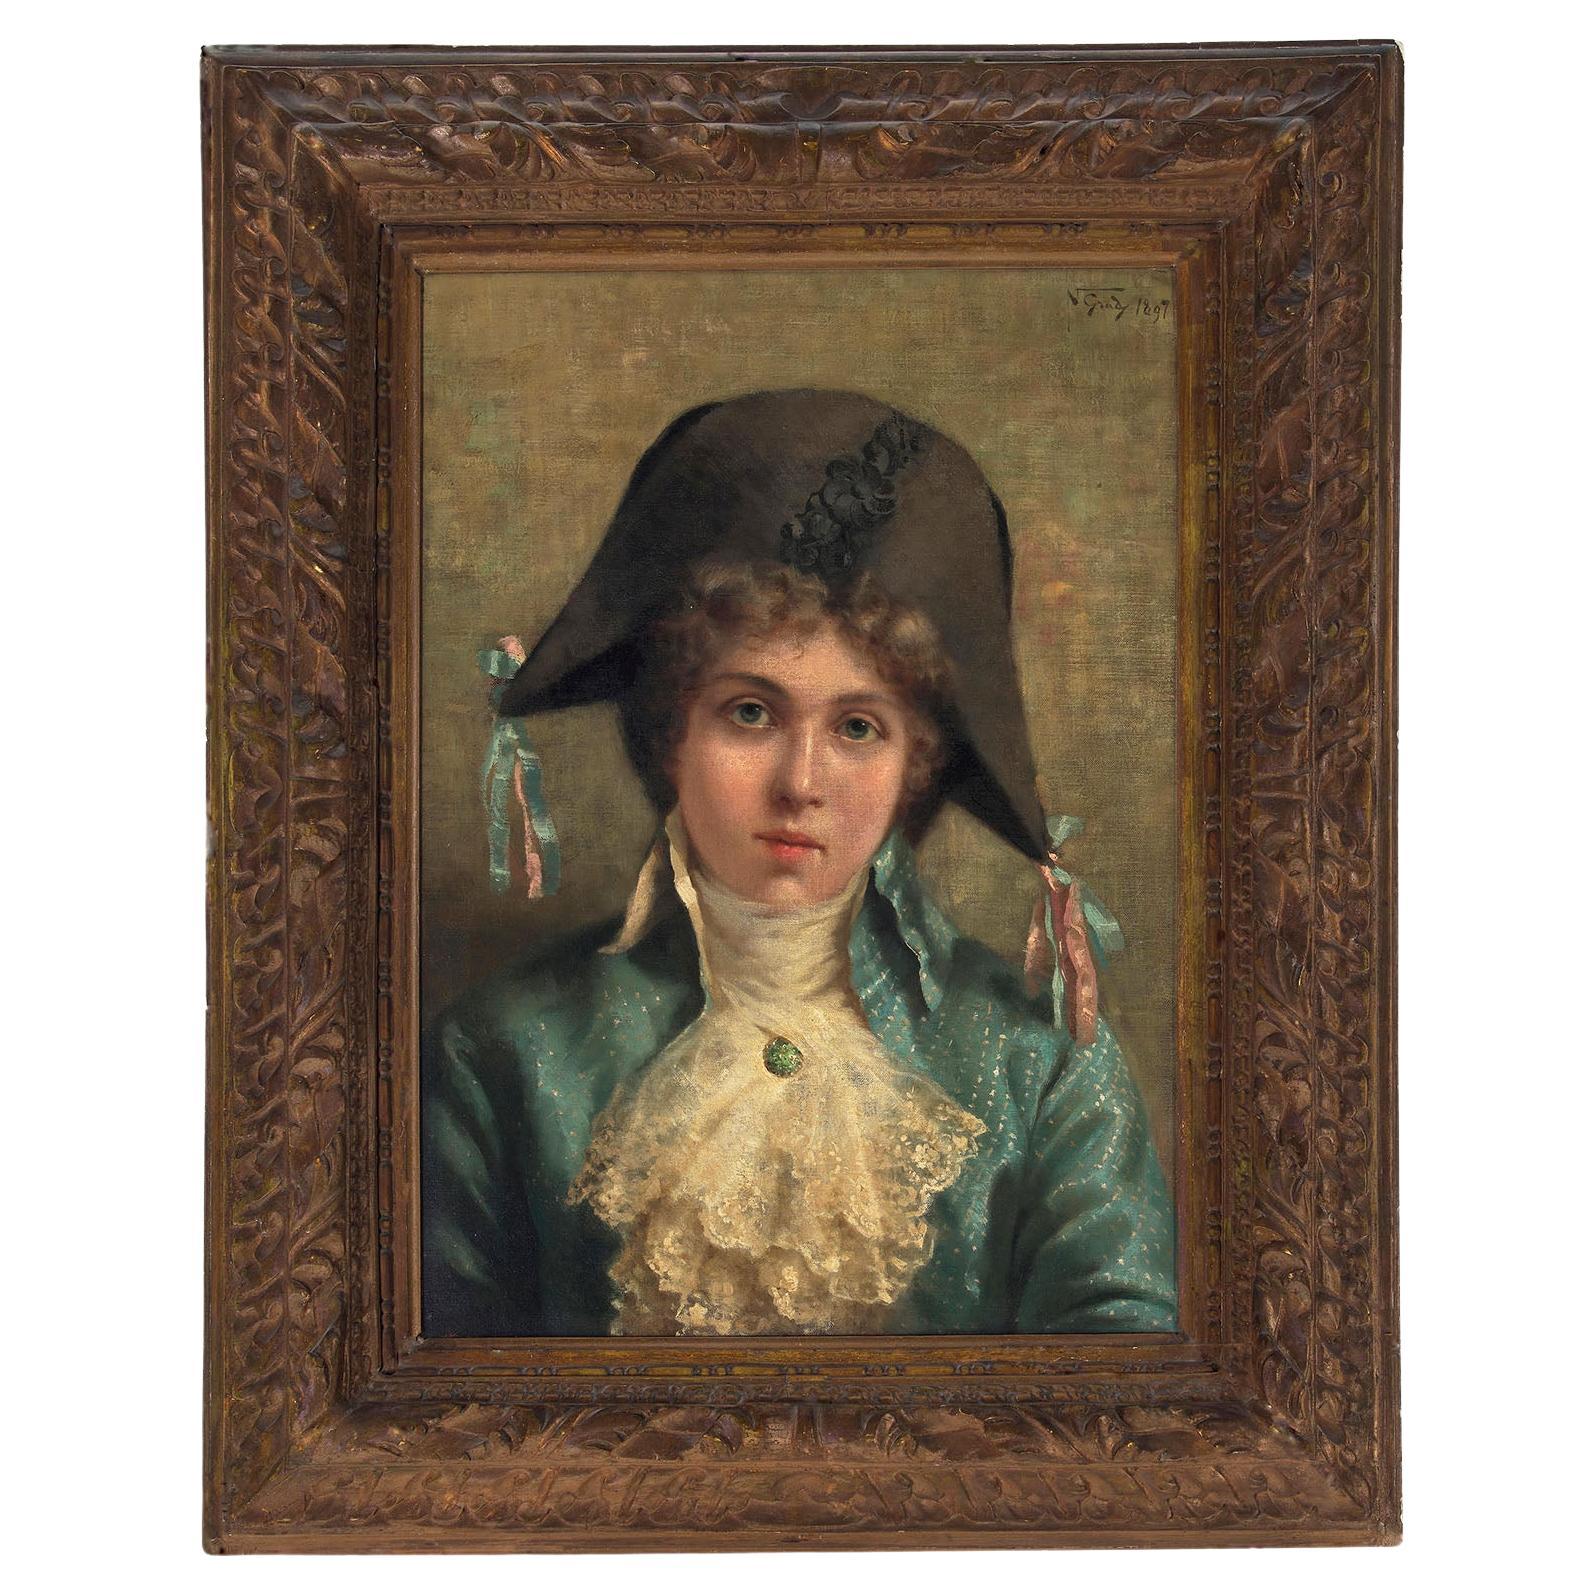 Napoleone Luigi Grady (Italian, 1860-1949) Oil on Canvas "Boy with Bicorne Hat"